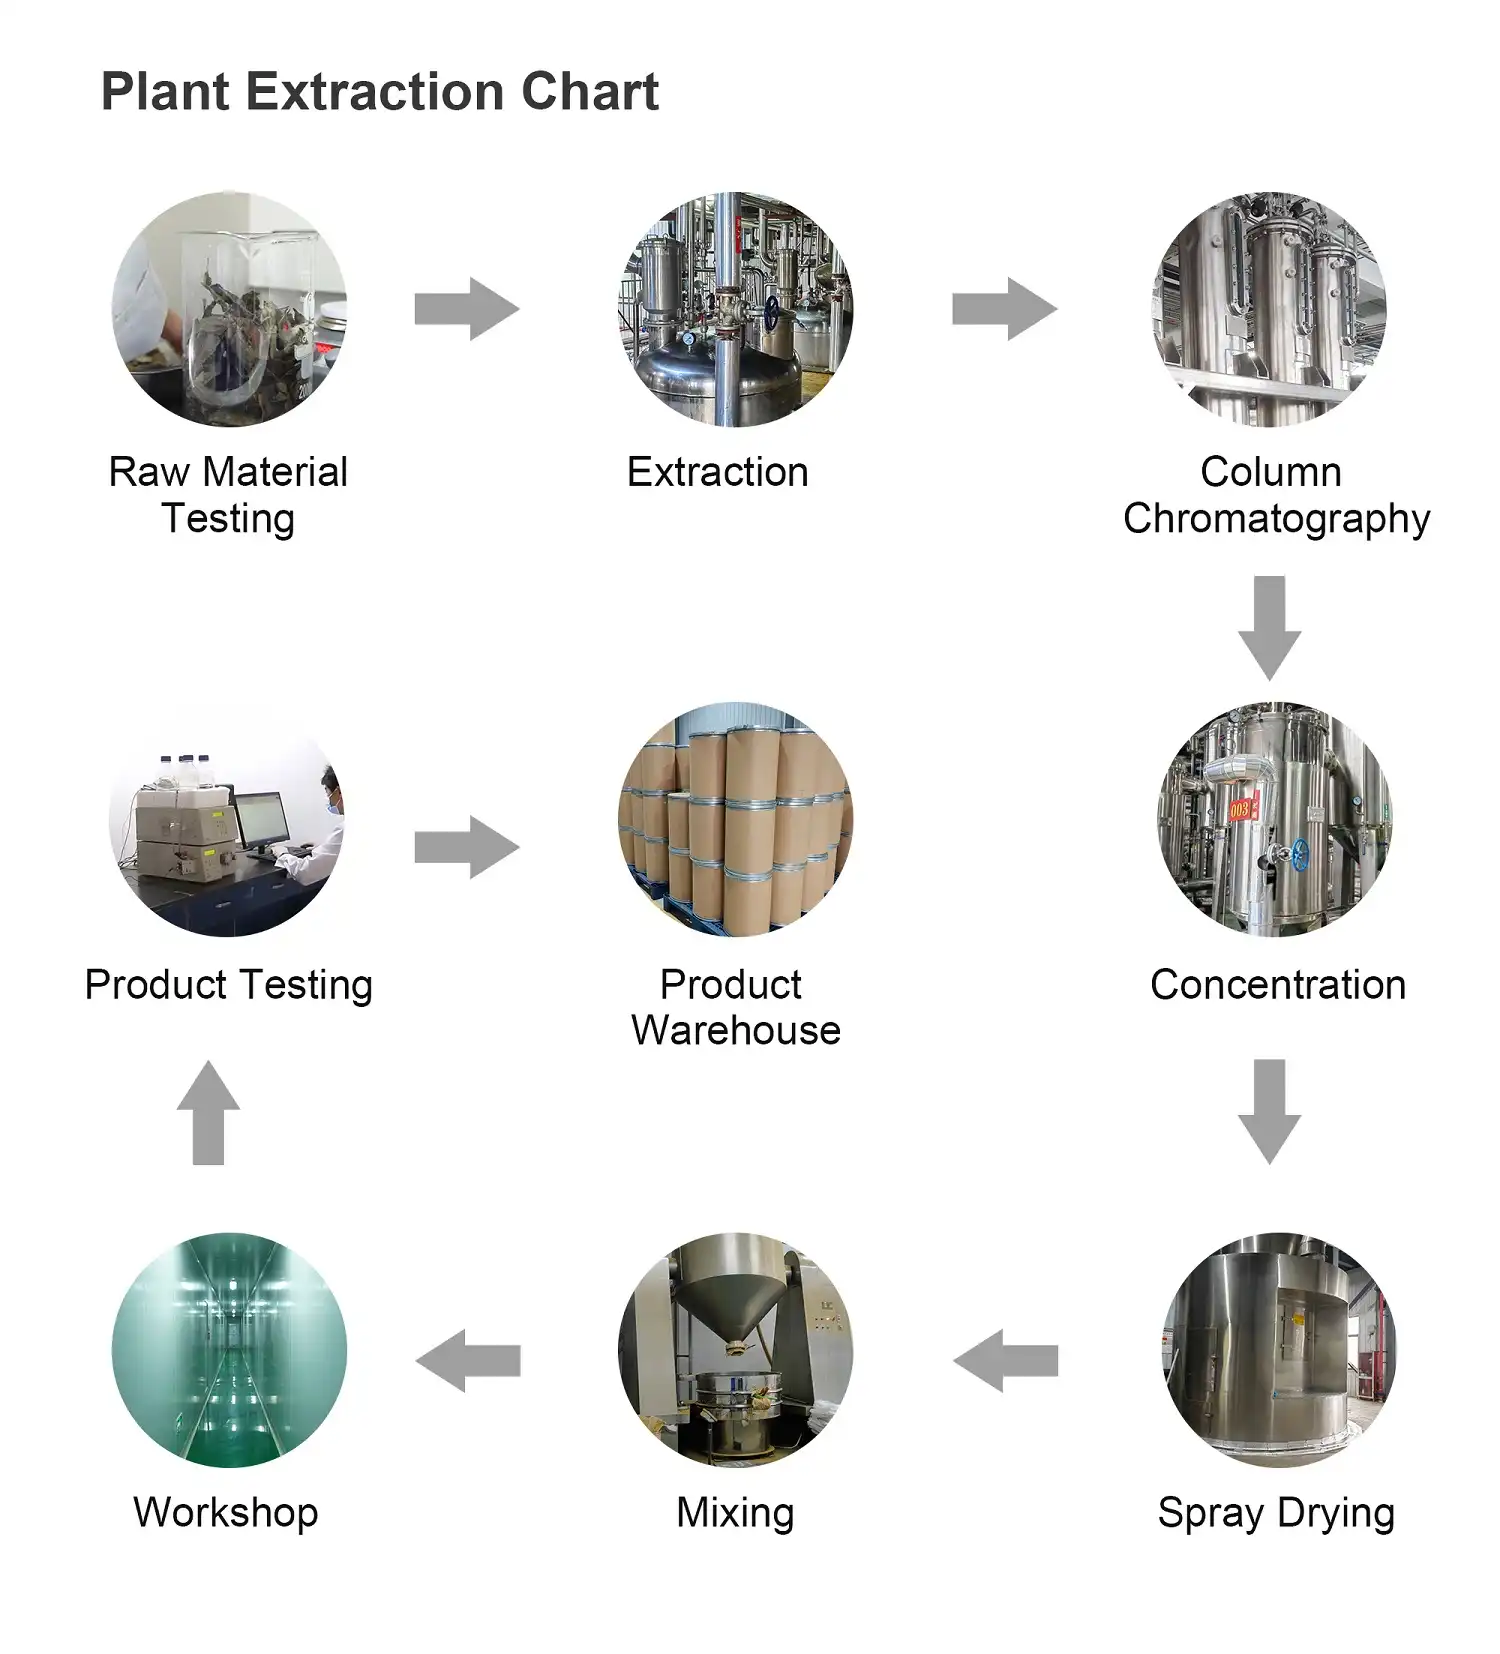 Extraction Chart wellgreen.jpg